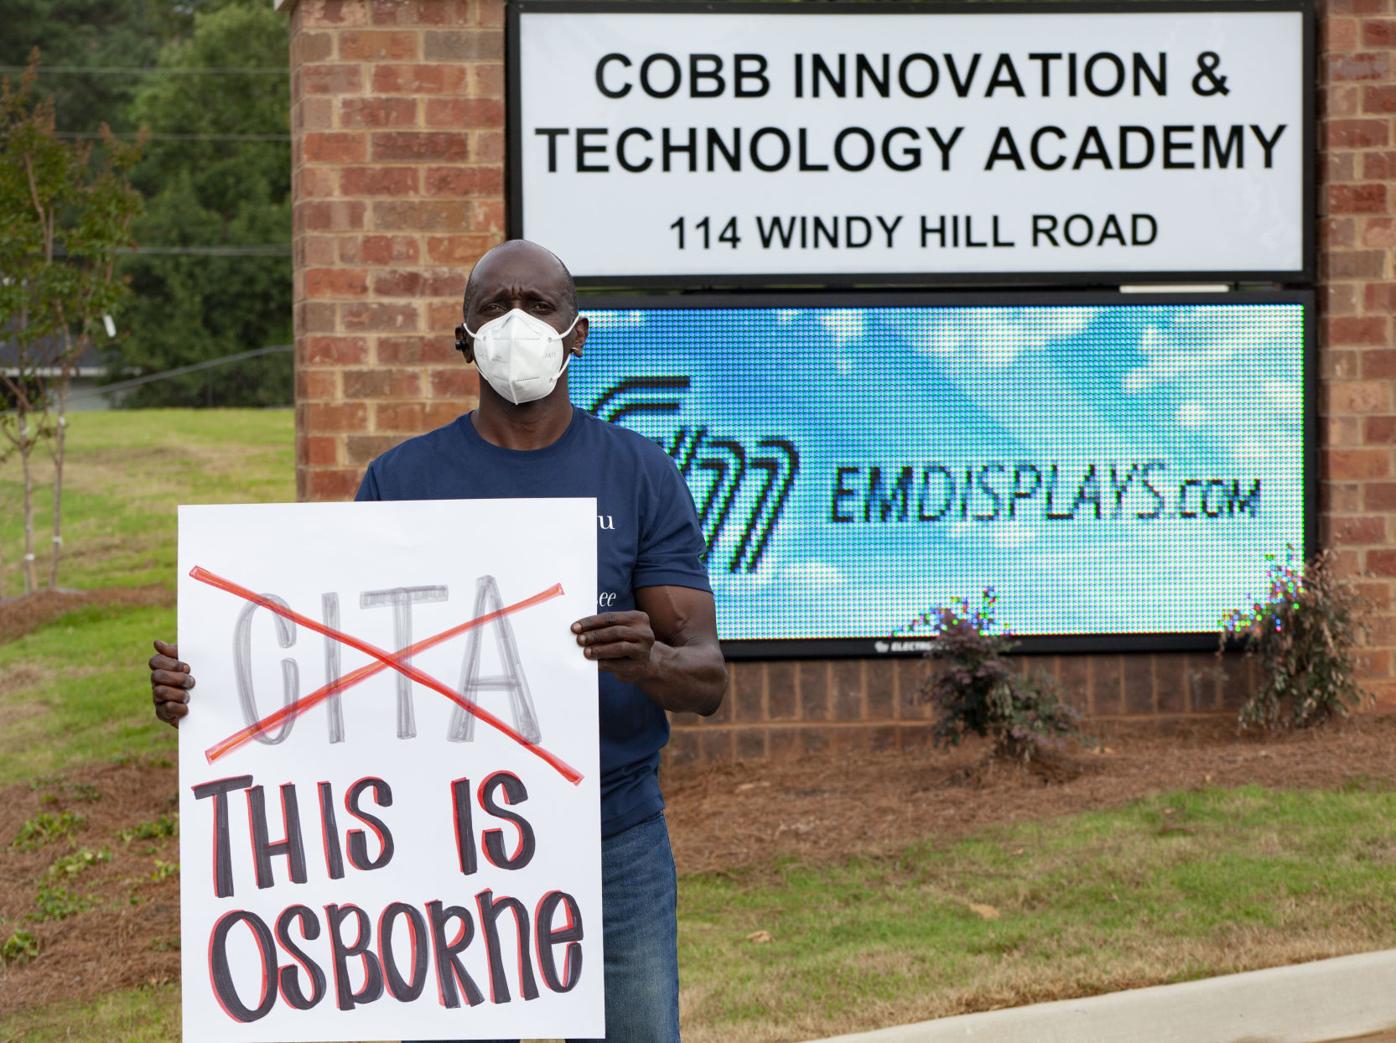 Cobb Innovation & Technology Academy